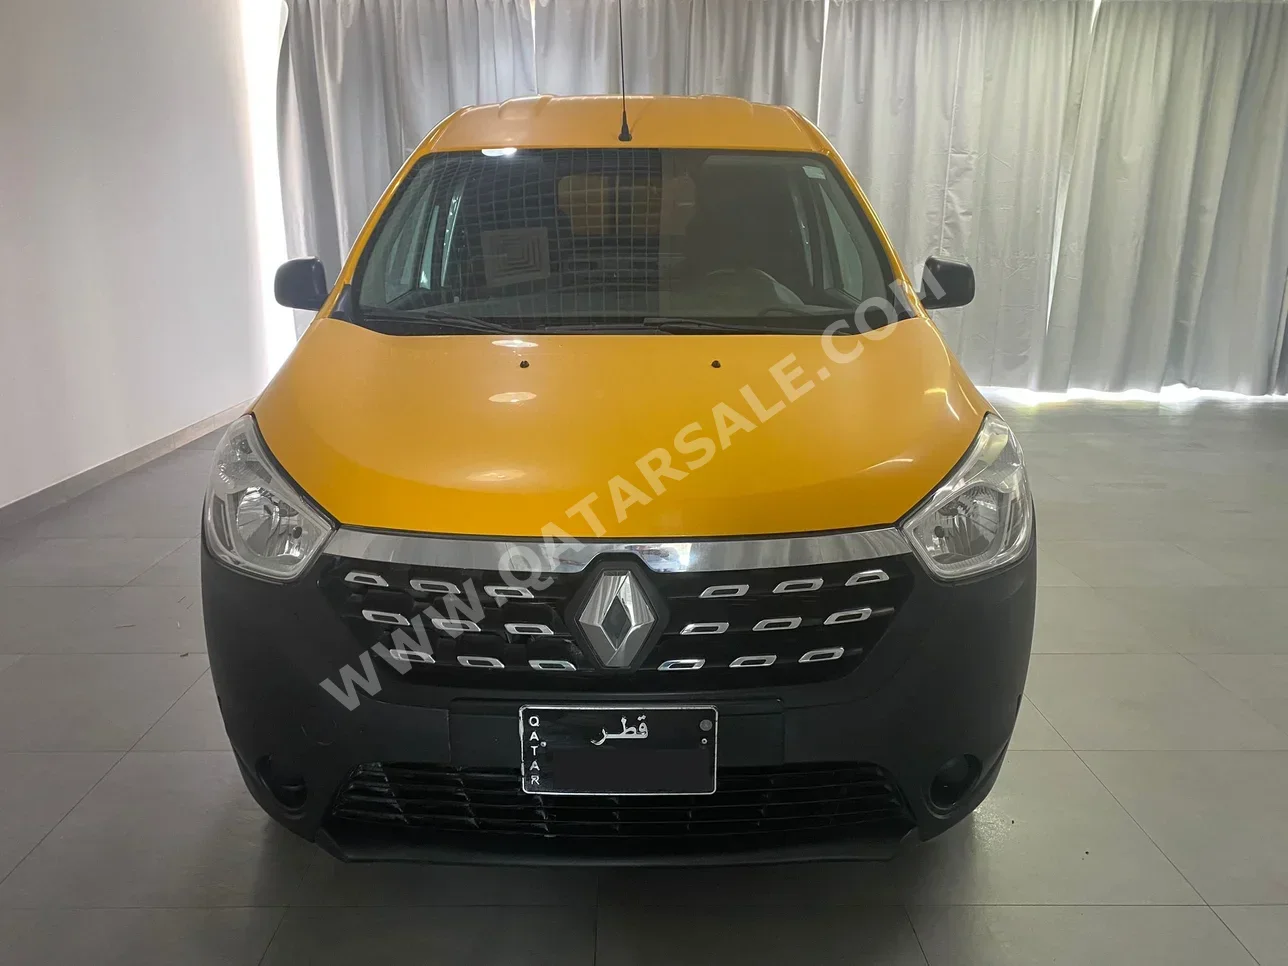 Renault  Dokker  2020  Manual  64,900 Km  4 Cylinder  Front Wheel Drive (FWD)  Van / Bus  Yellow